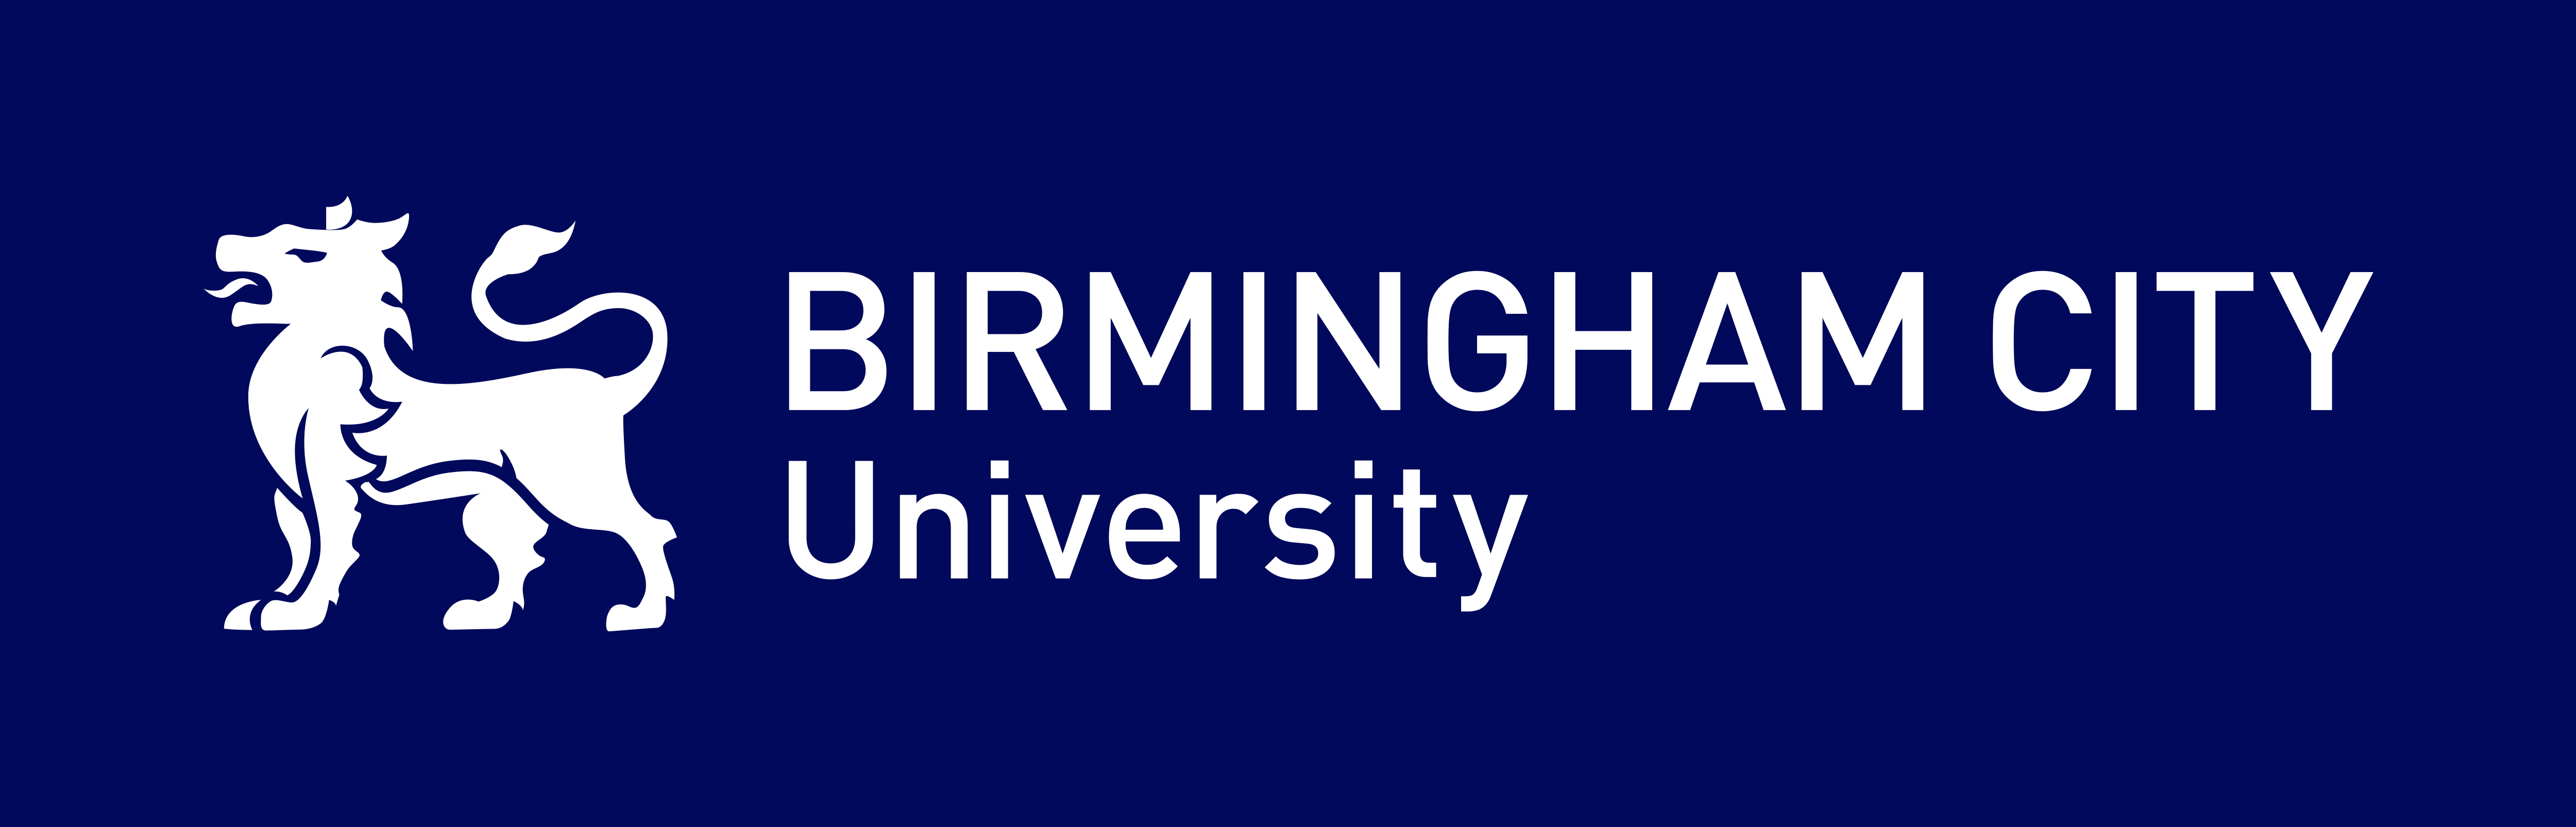 Birmingham City University employer's logo